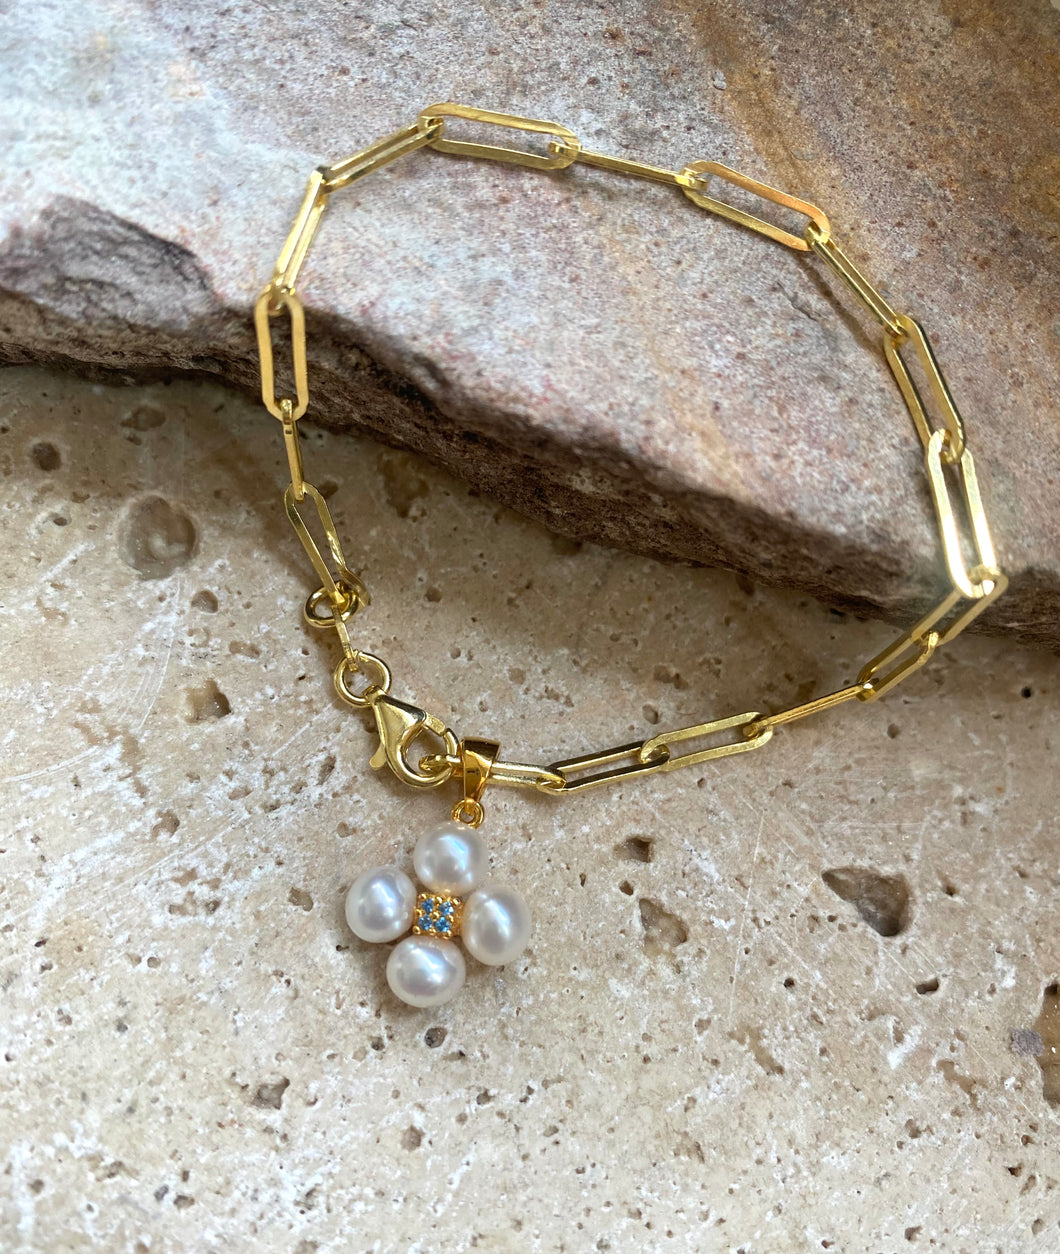 Open link bracelet with pearl pendant